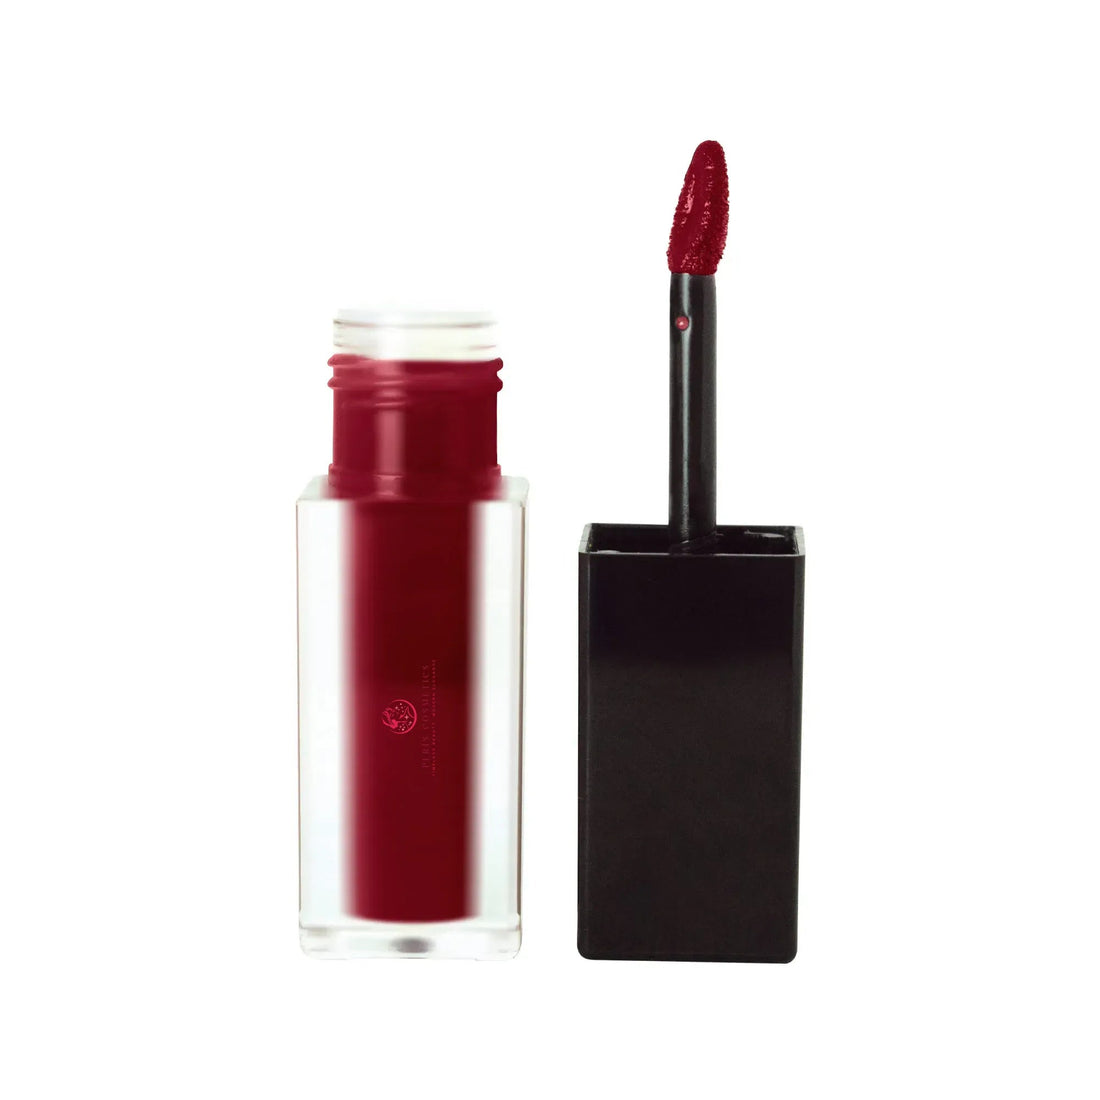 Peris Cosmetics Dark Sienna Matte Lip Stain: Velvety Finish, Pigment-Rich Perfection Kylie Cosmetics Amazon